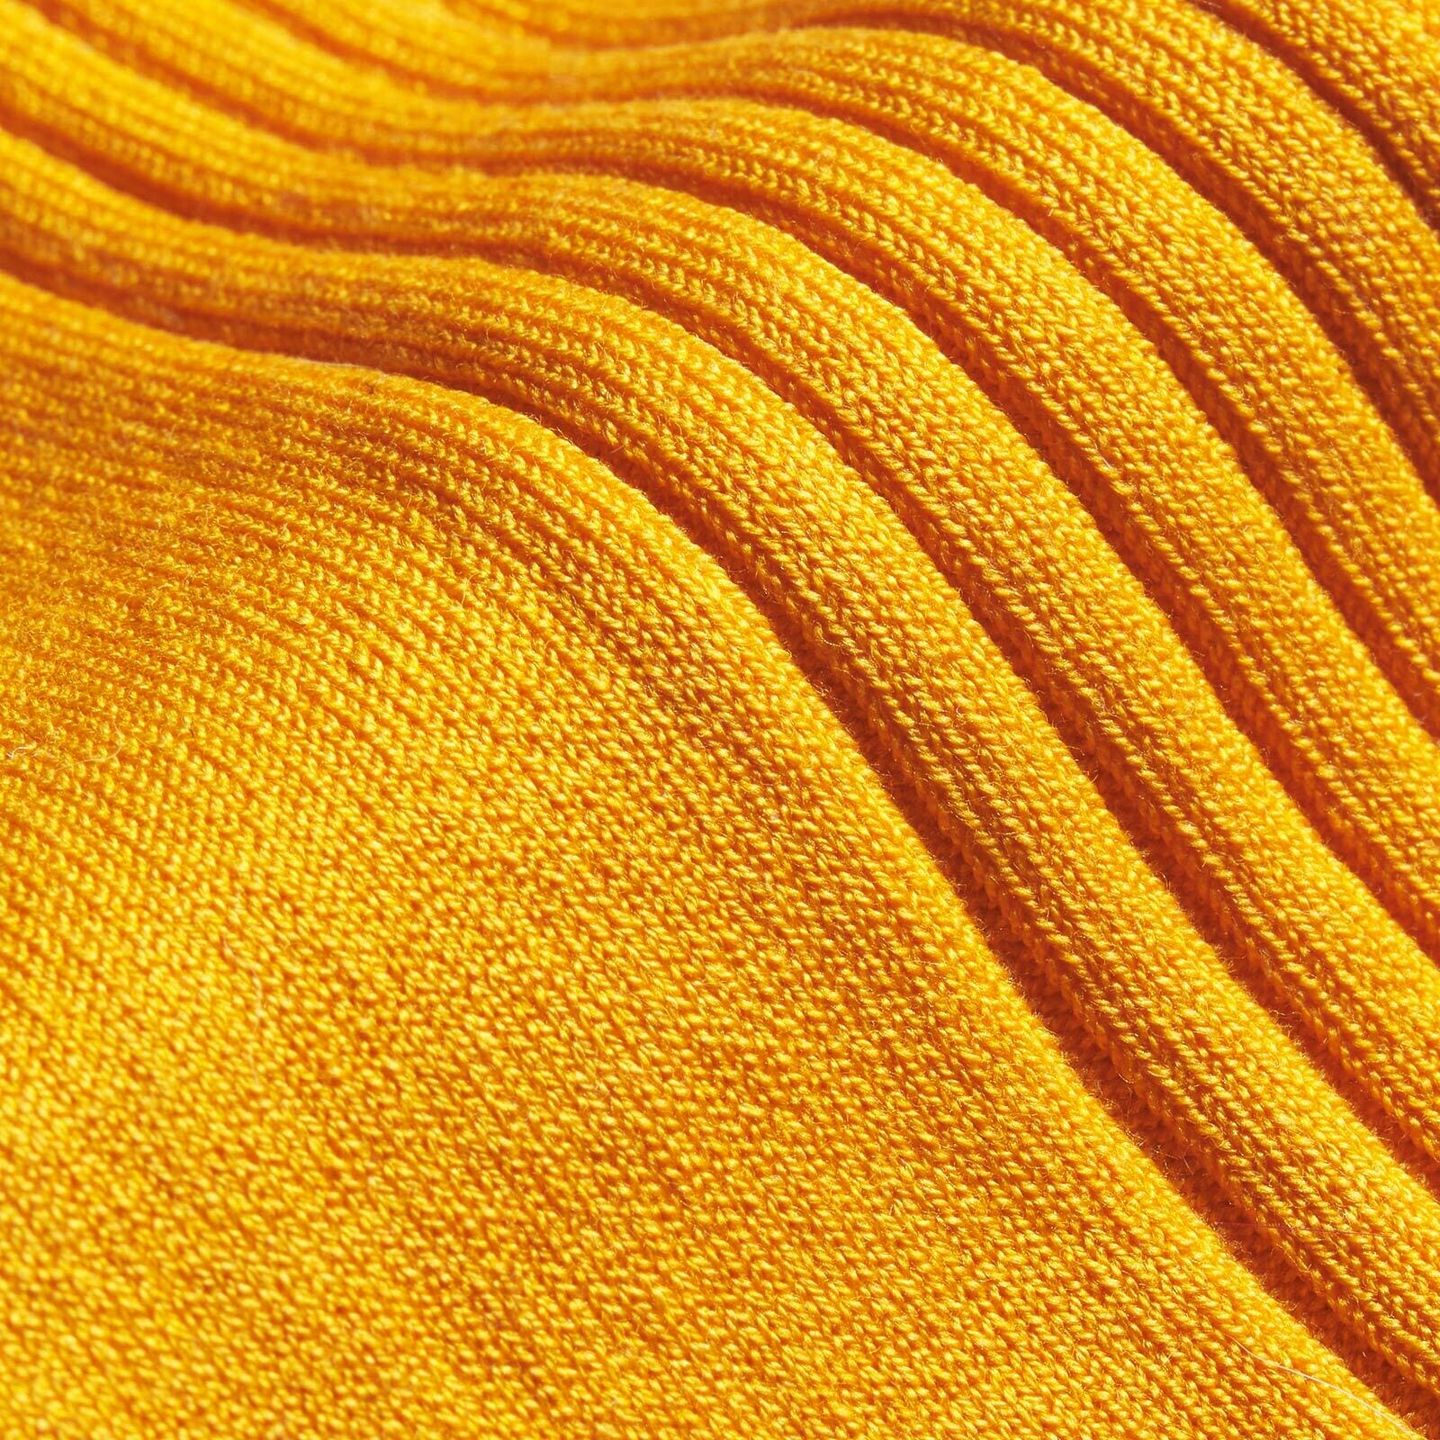 A close up of an orange sock